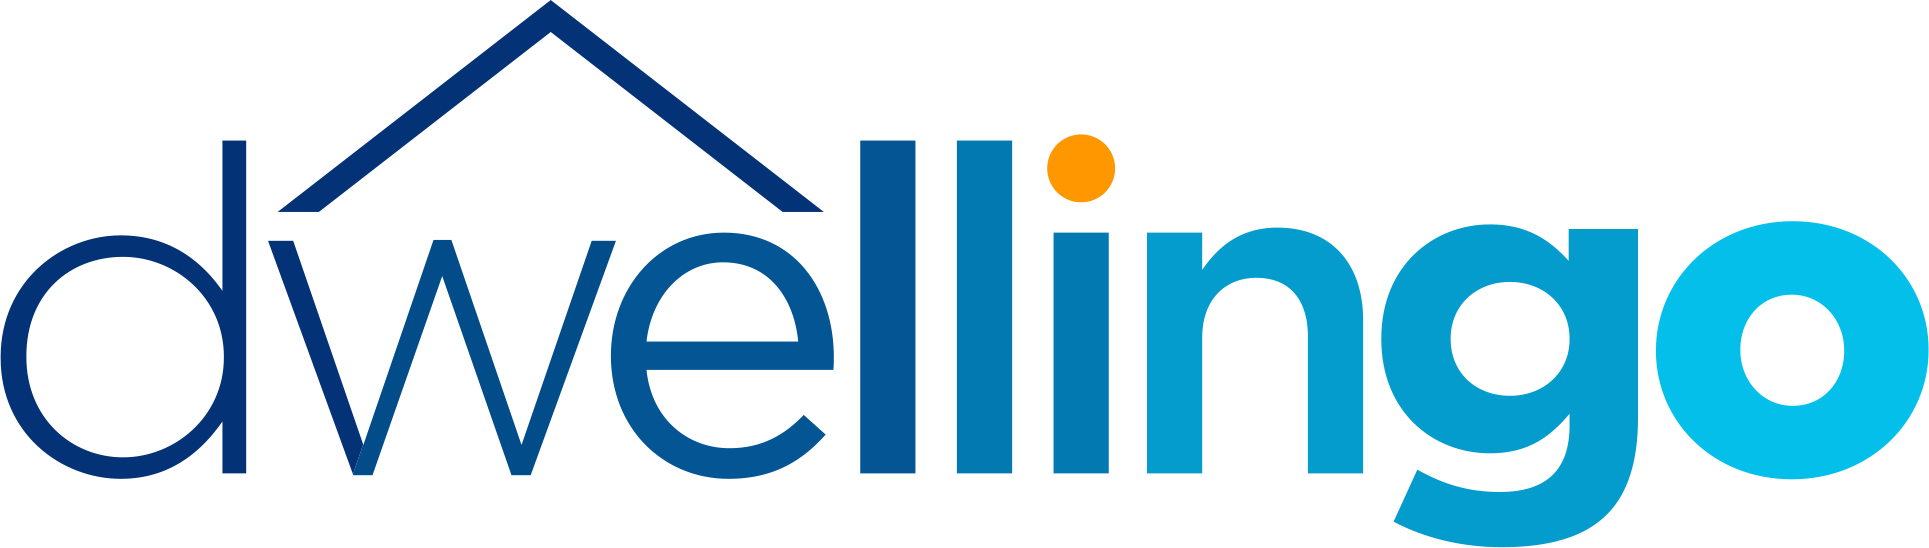 dwellingo Logo